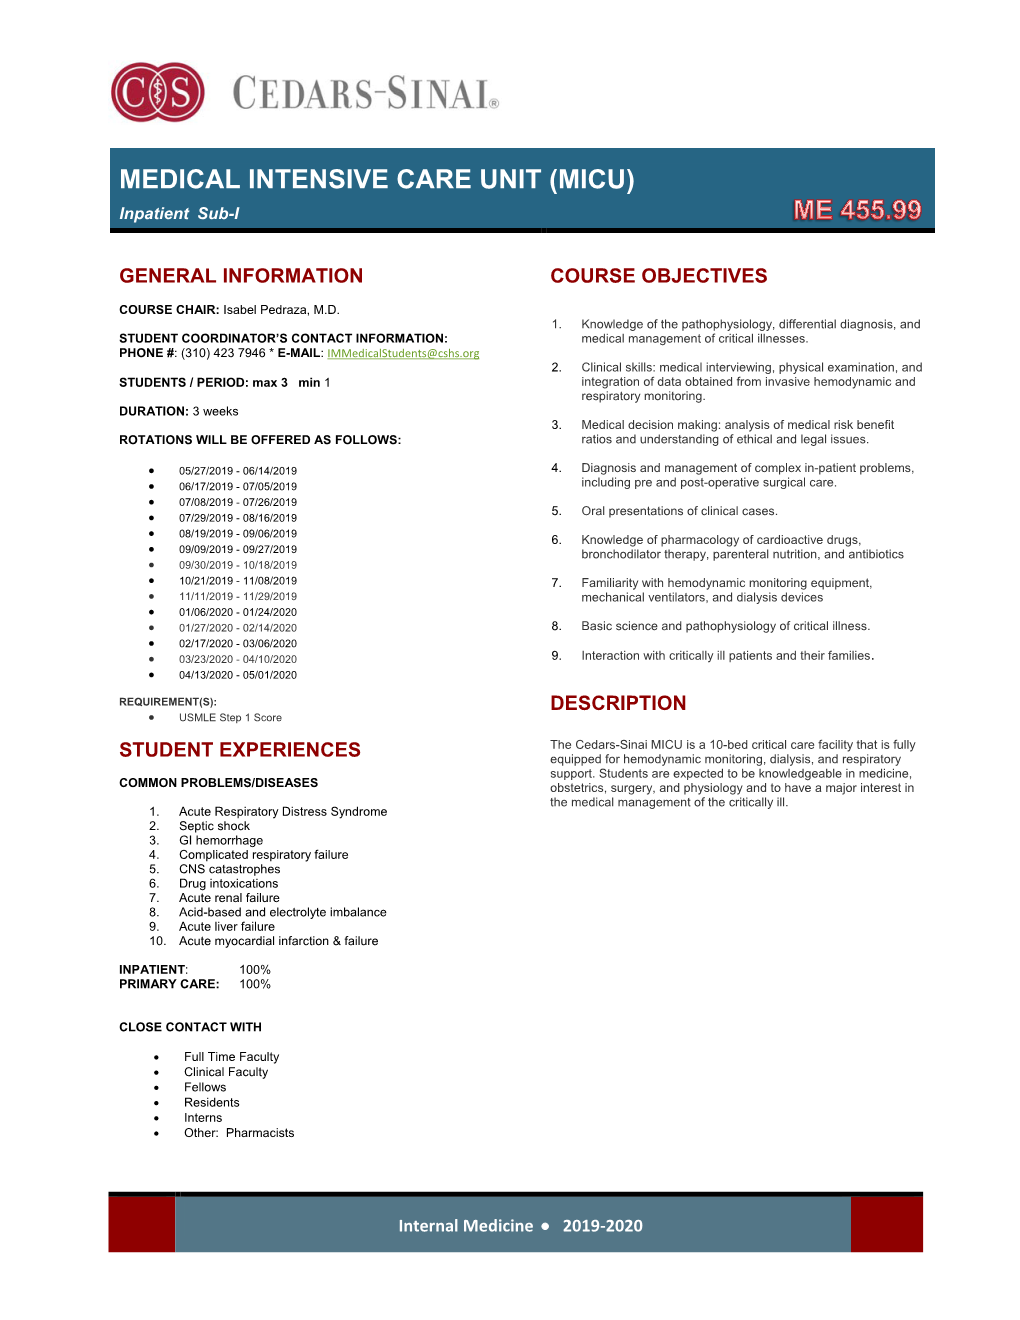 MEDICAL INTENSIVE CARE UNIT (MICU) Inpatient Sub-I